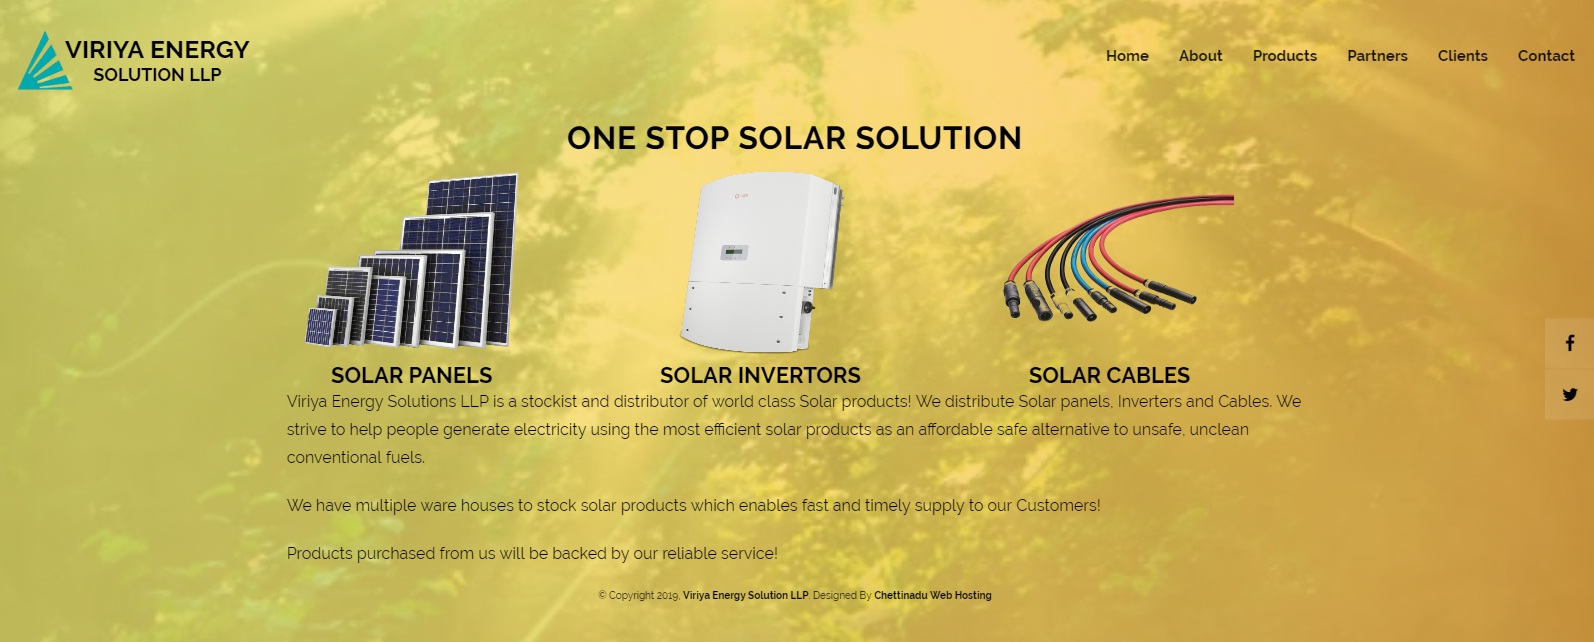 Viriya Energy Solutions LLC